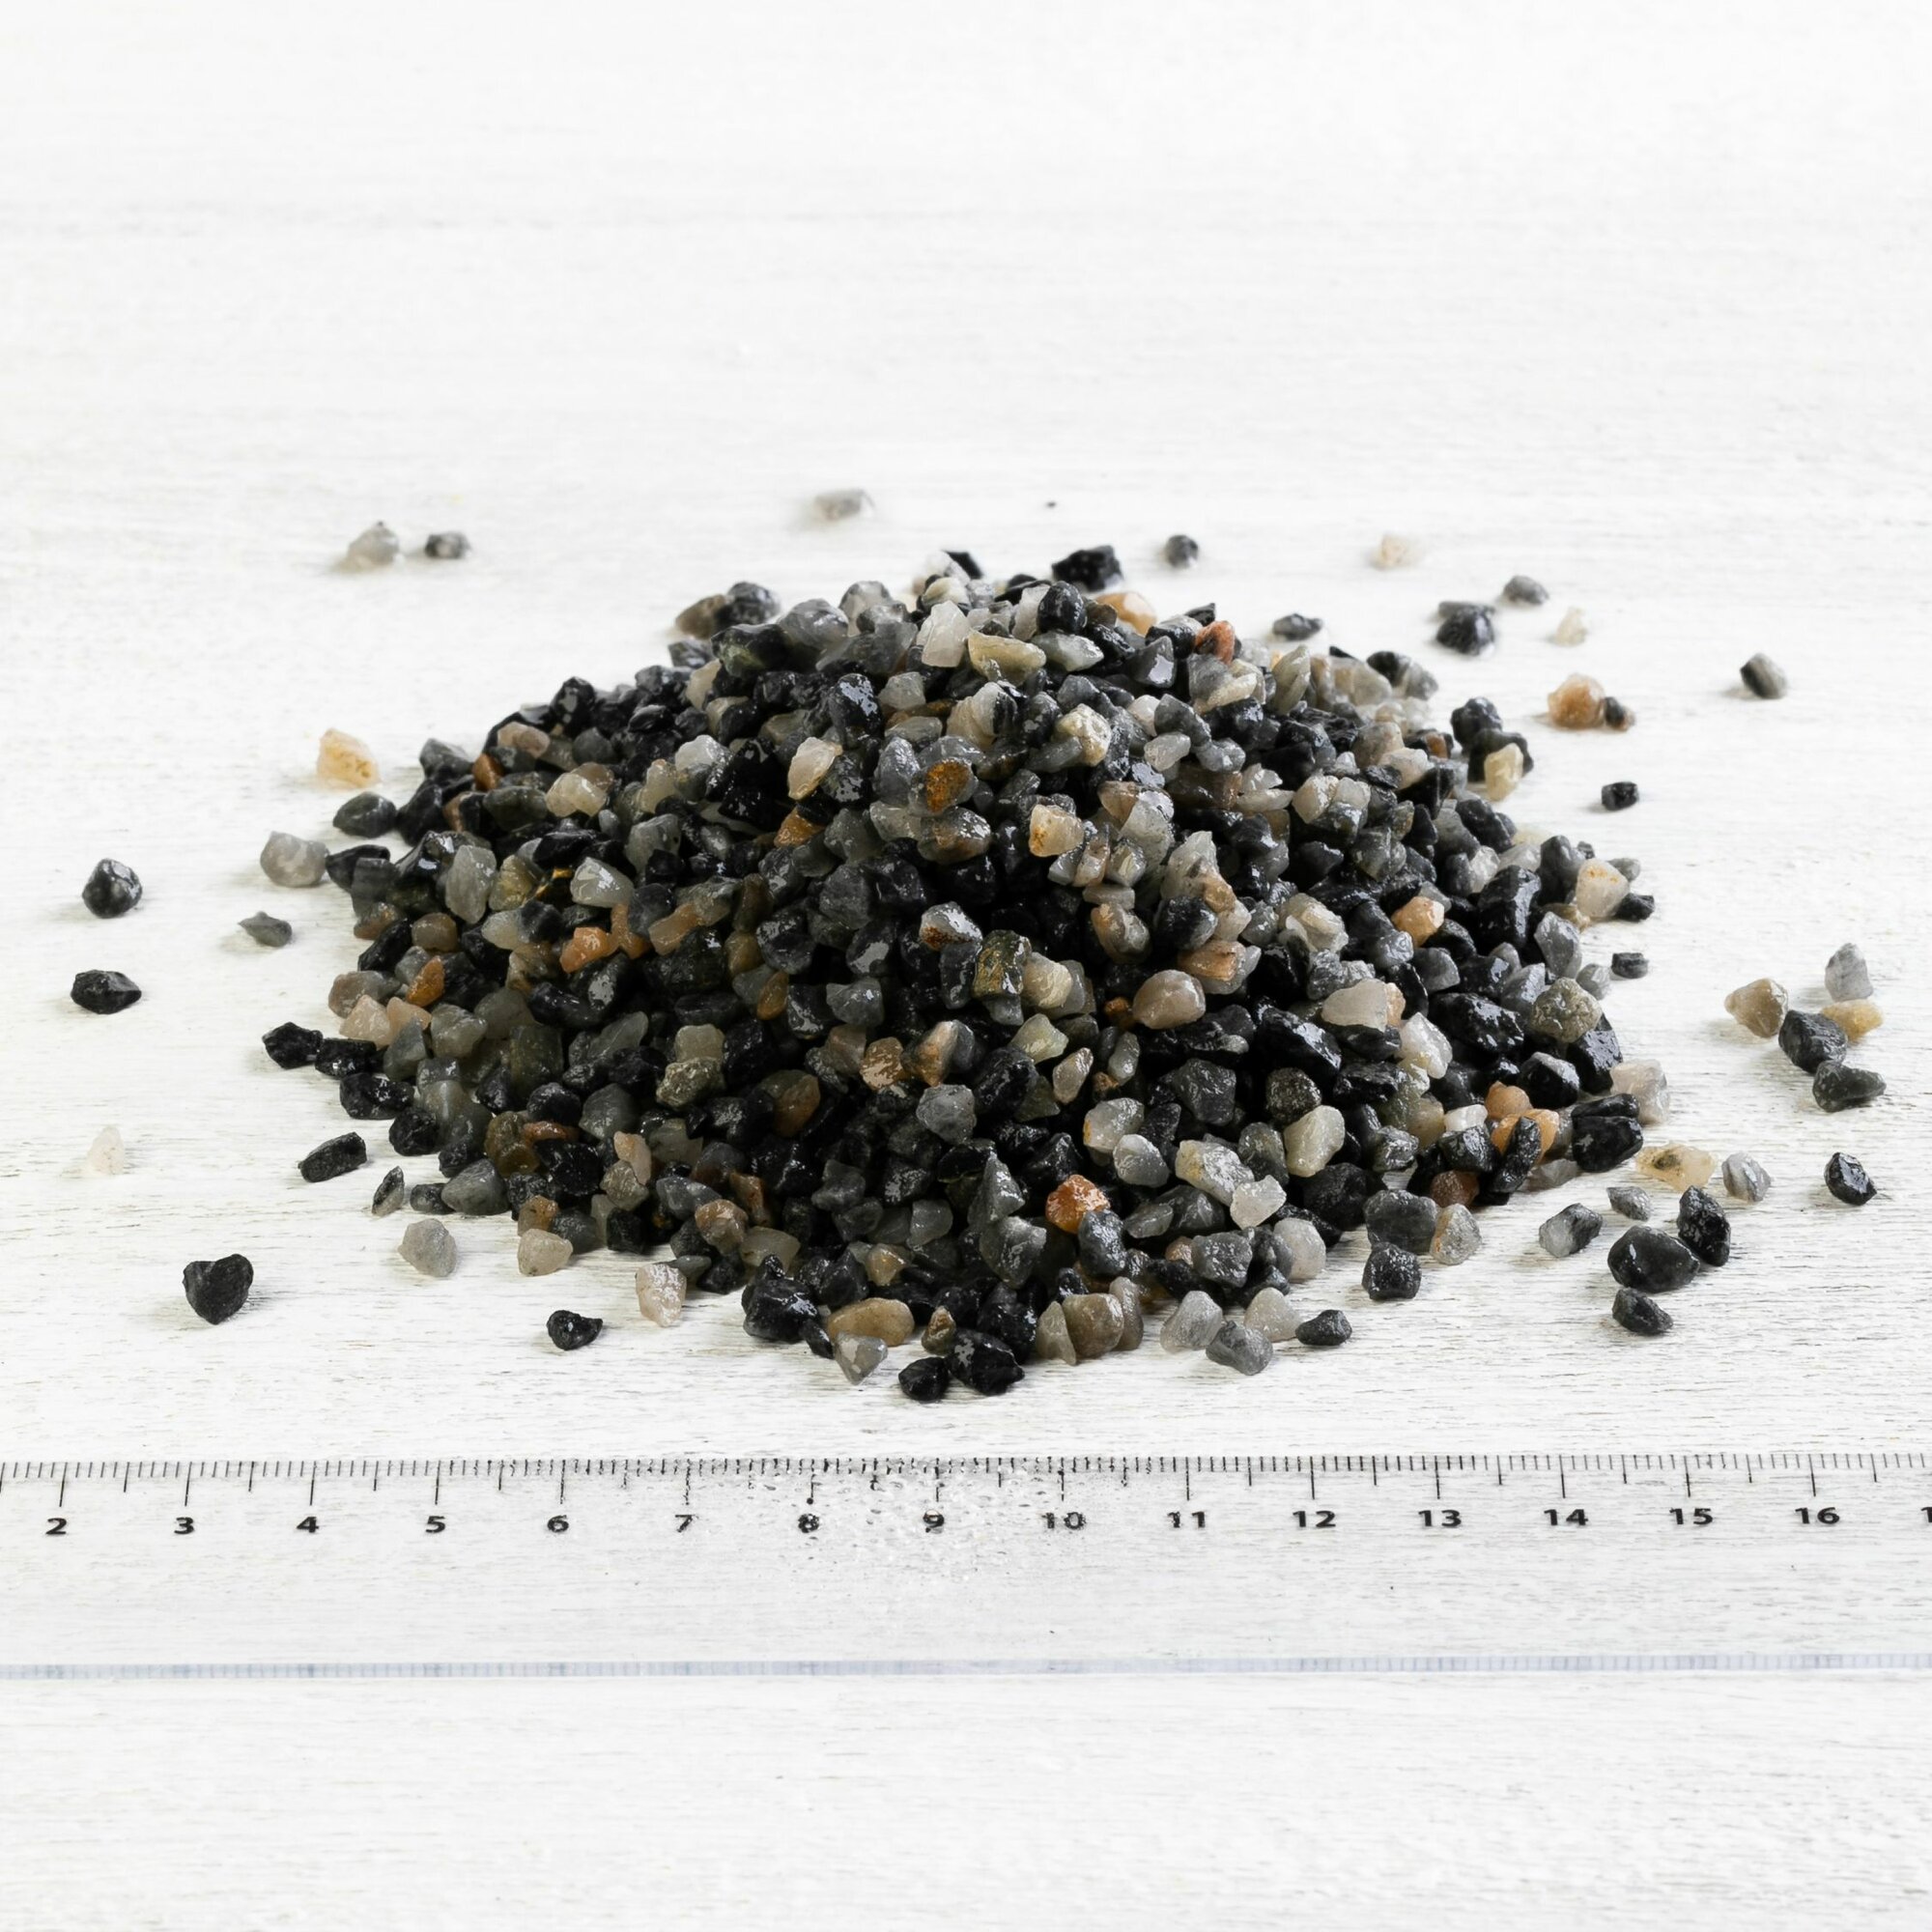 Кварц серый бобровский кварцит фр. 2-5 мм, 5 кг (341). Каменная крошка, декоративный грунт